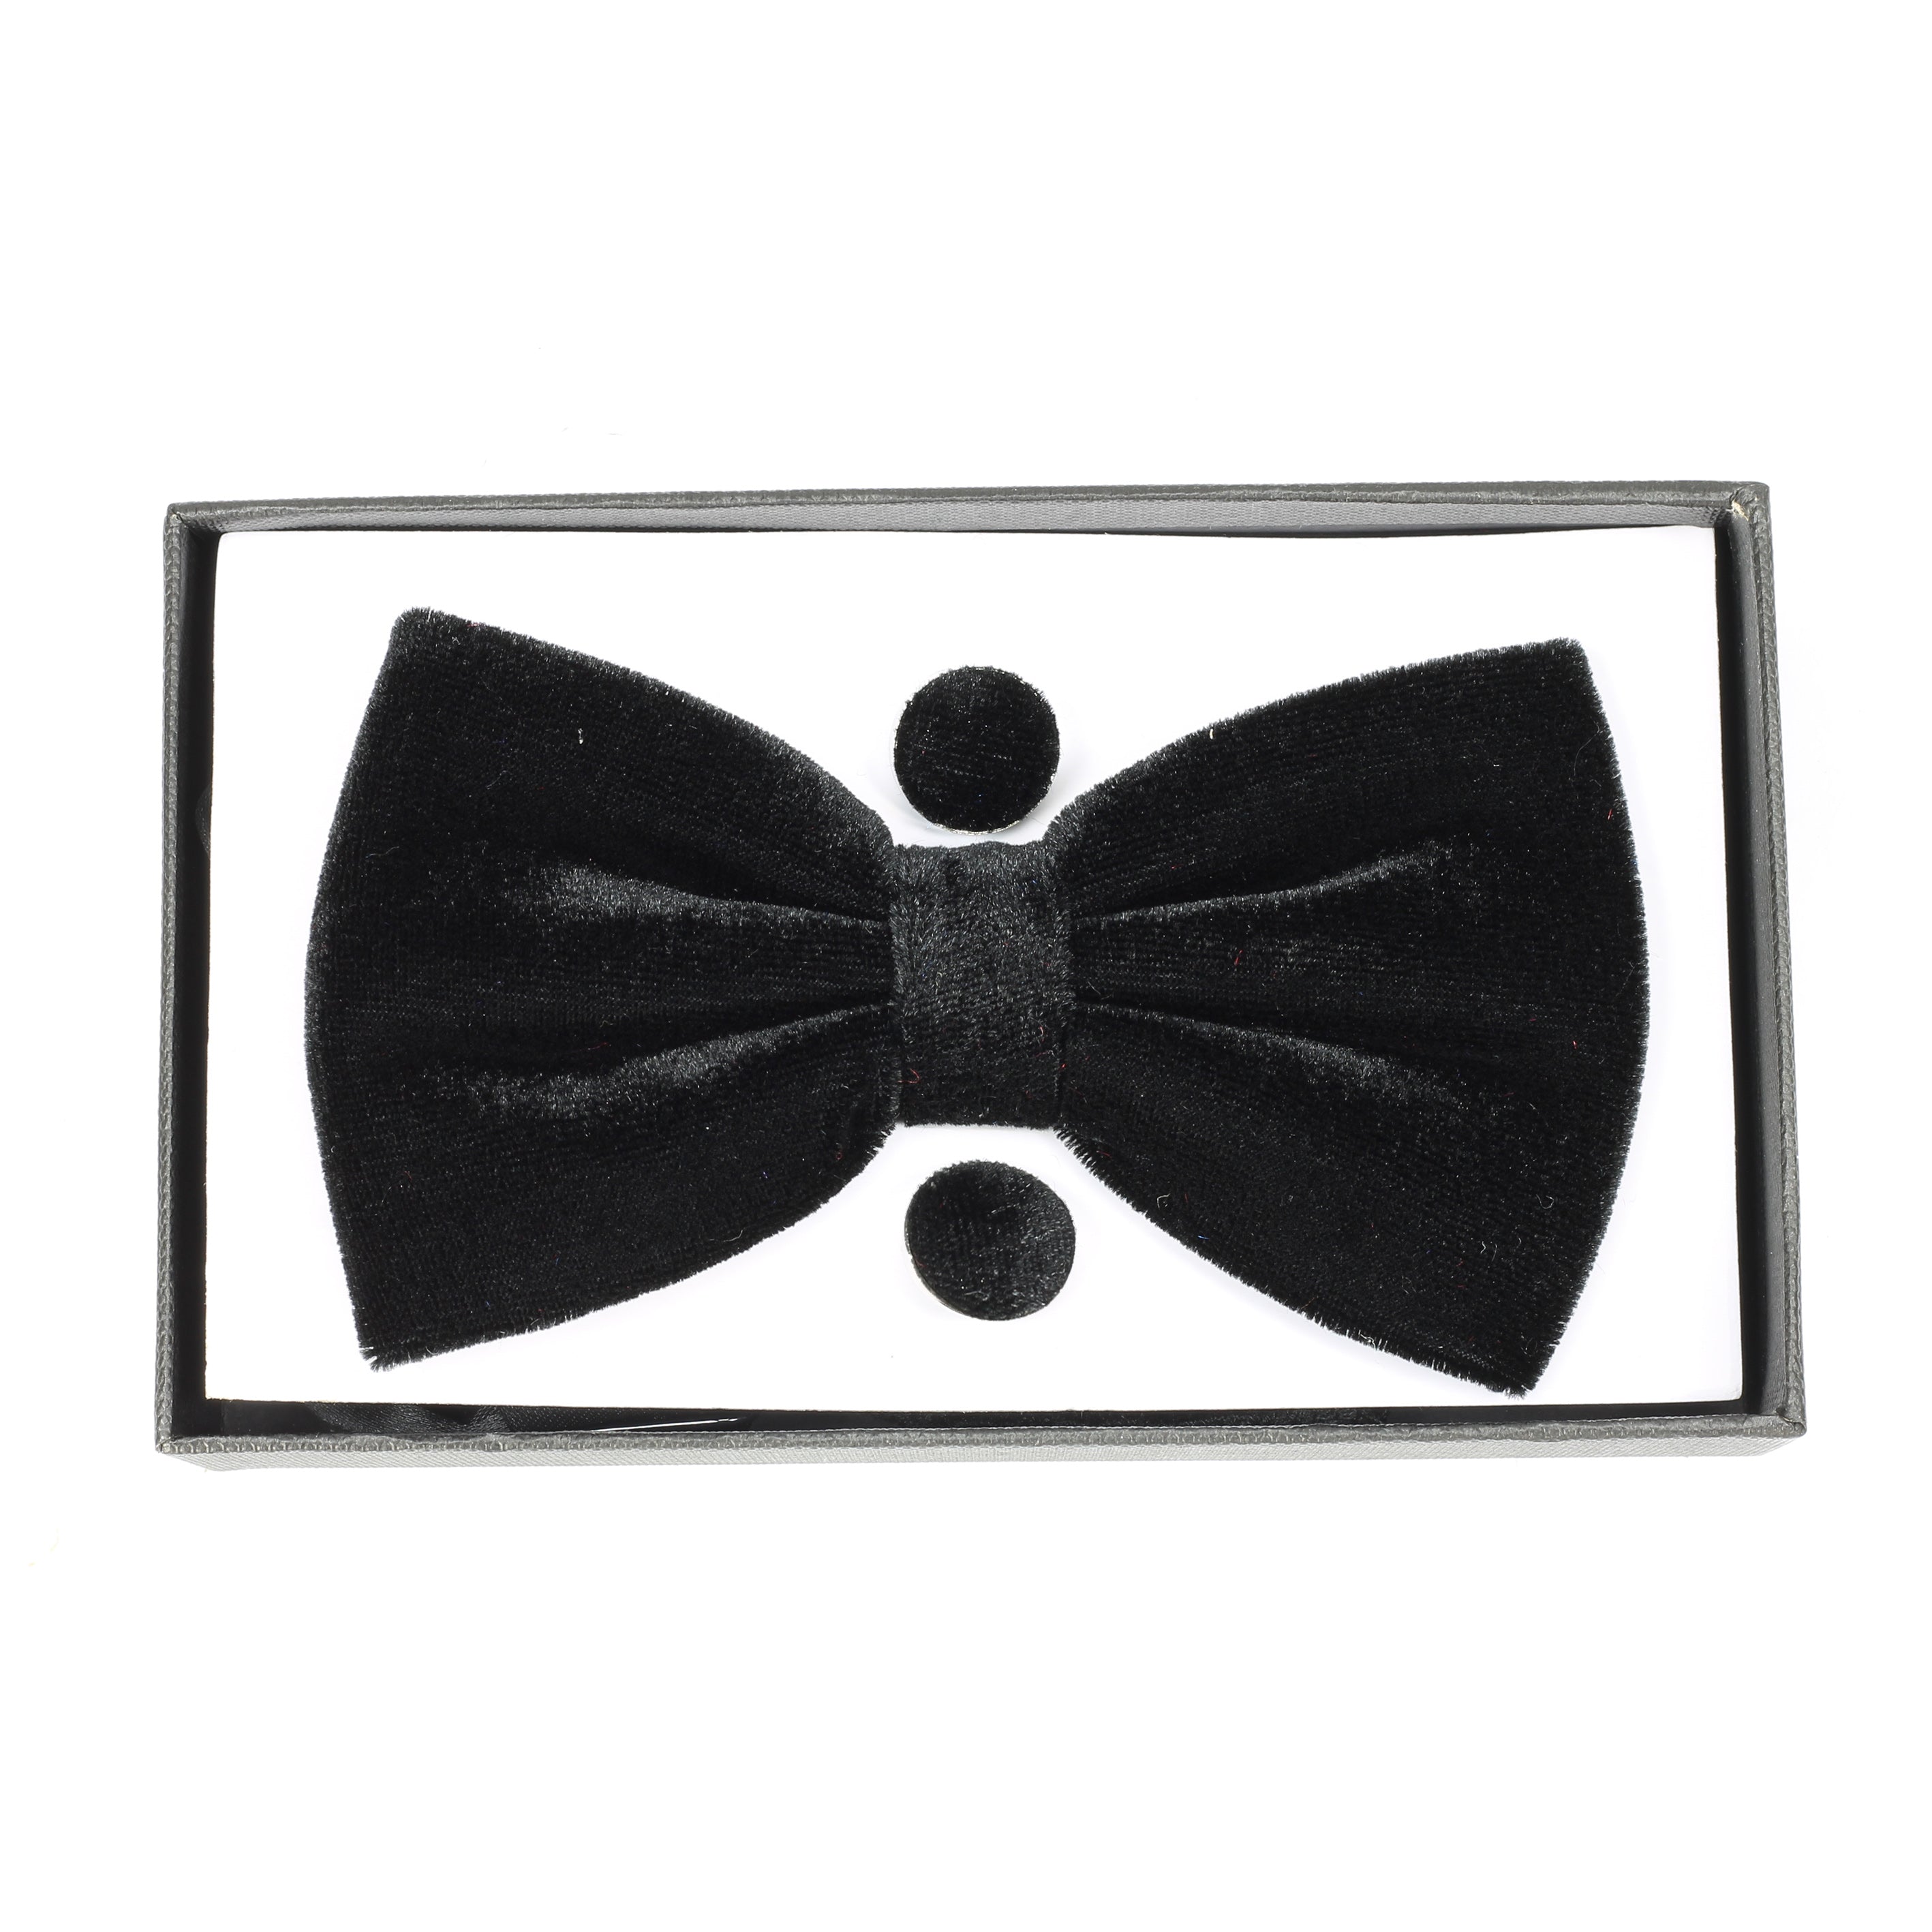 Black Shiny Velvet Bow Tie With Cufflink Pocket Square